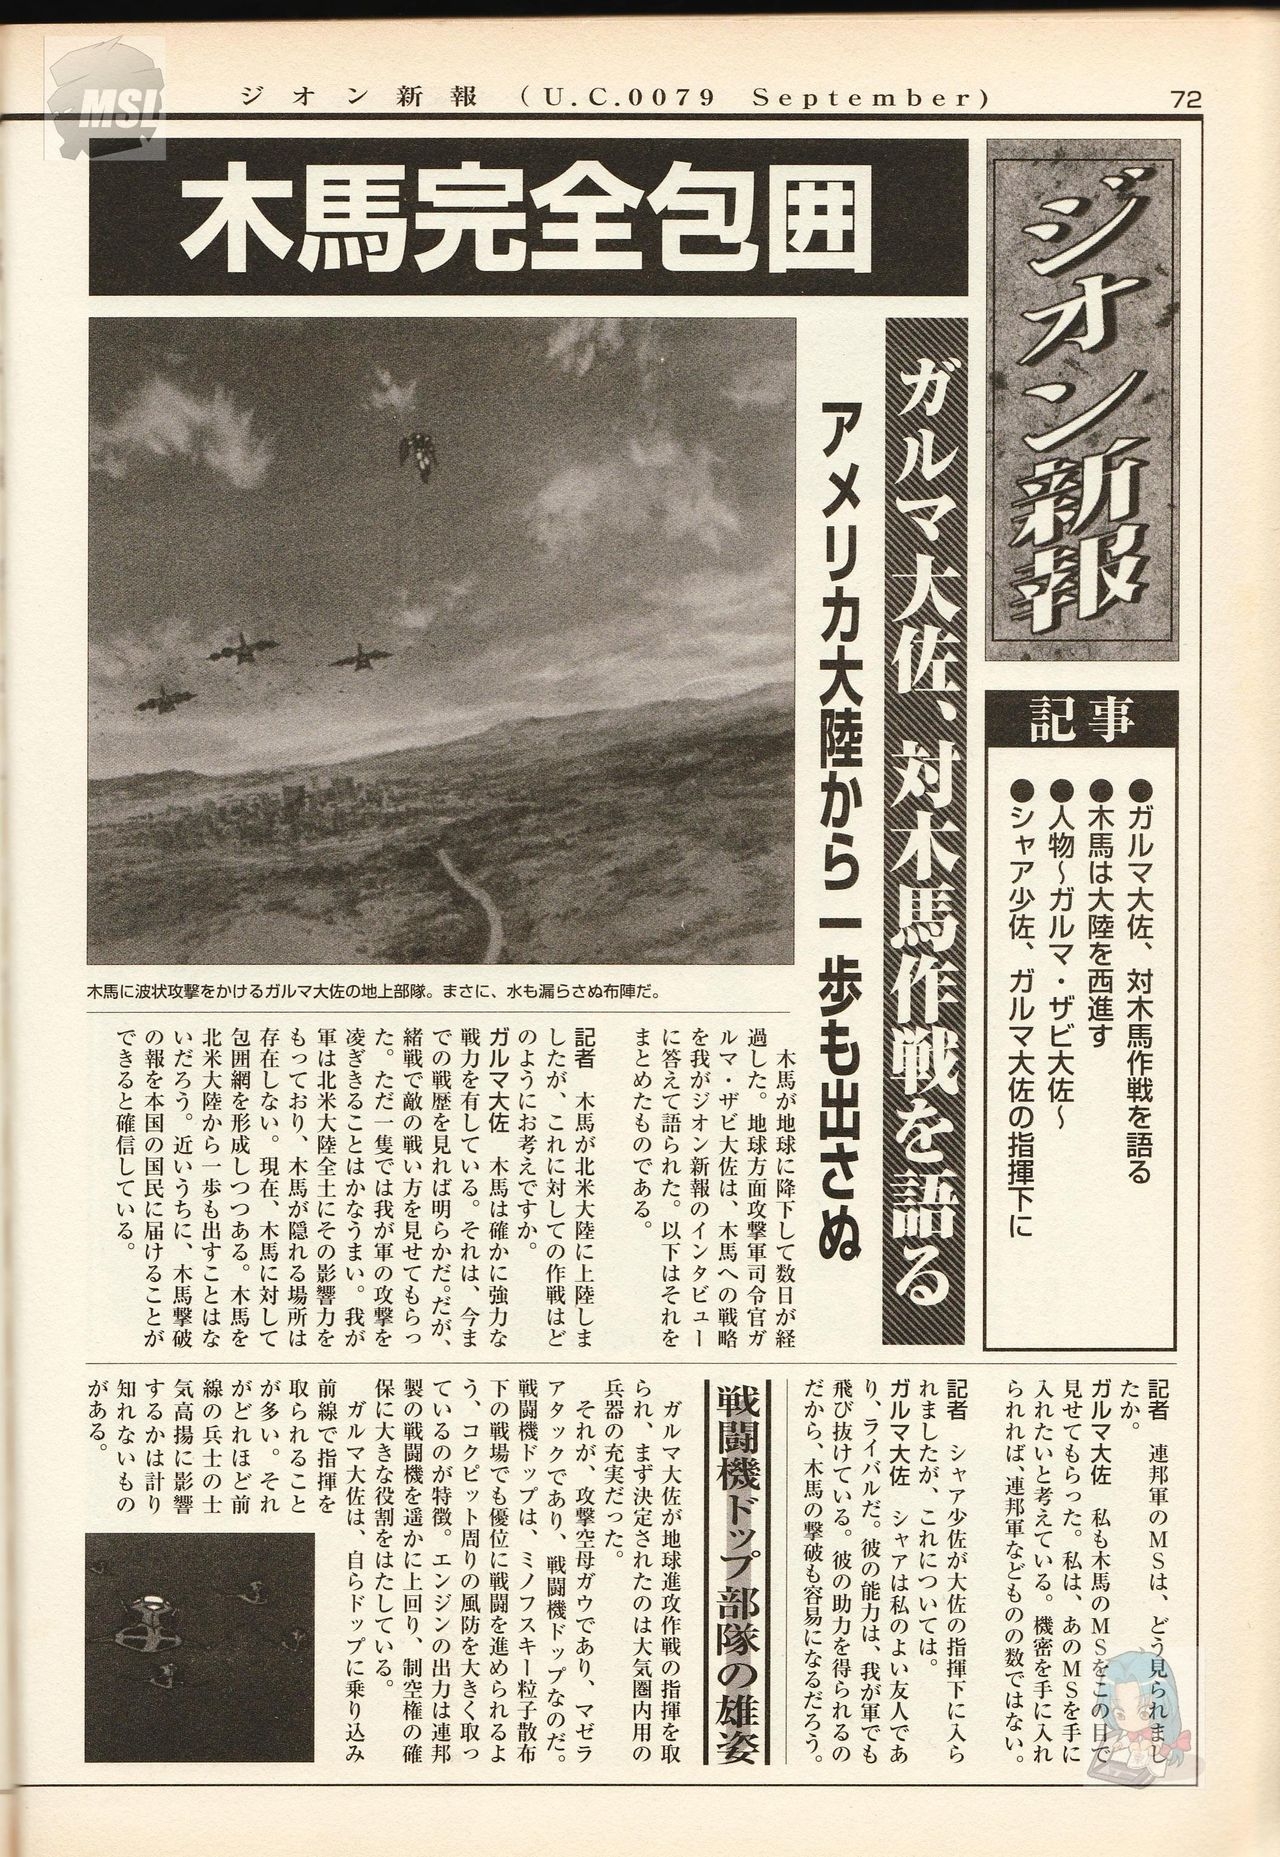 Mobile Suit Gundam - Zeon - Classified Records 75